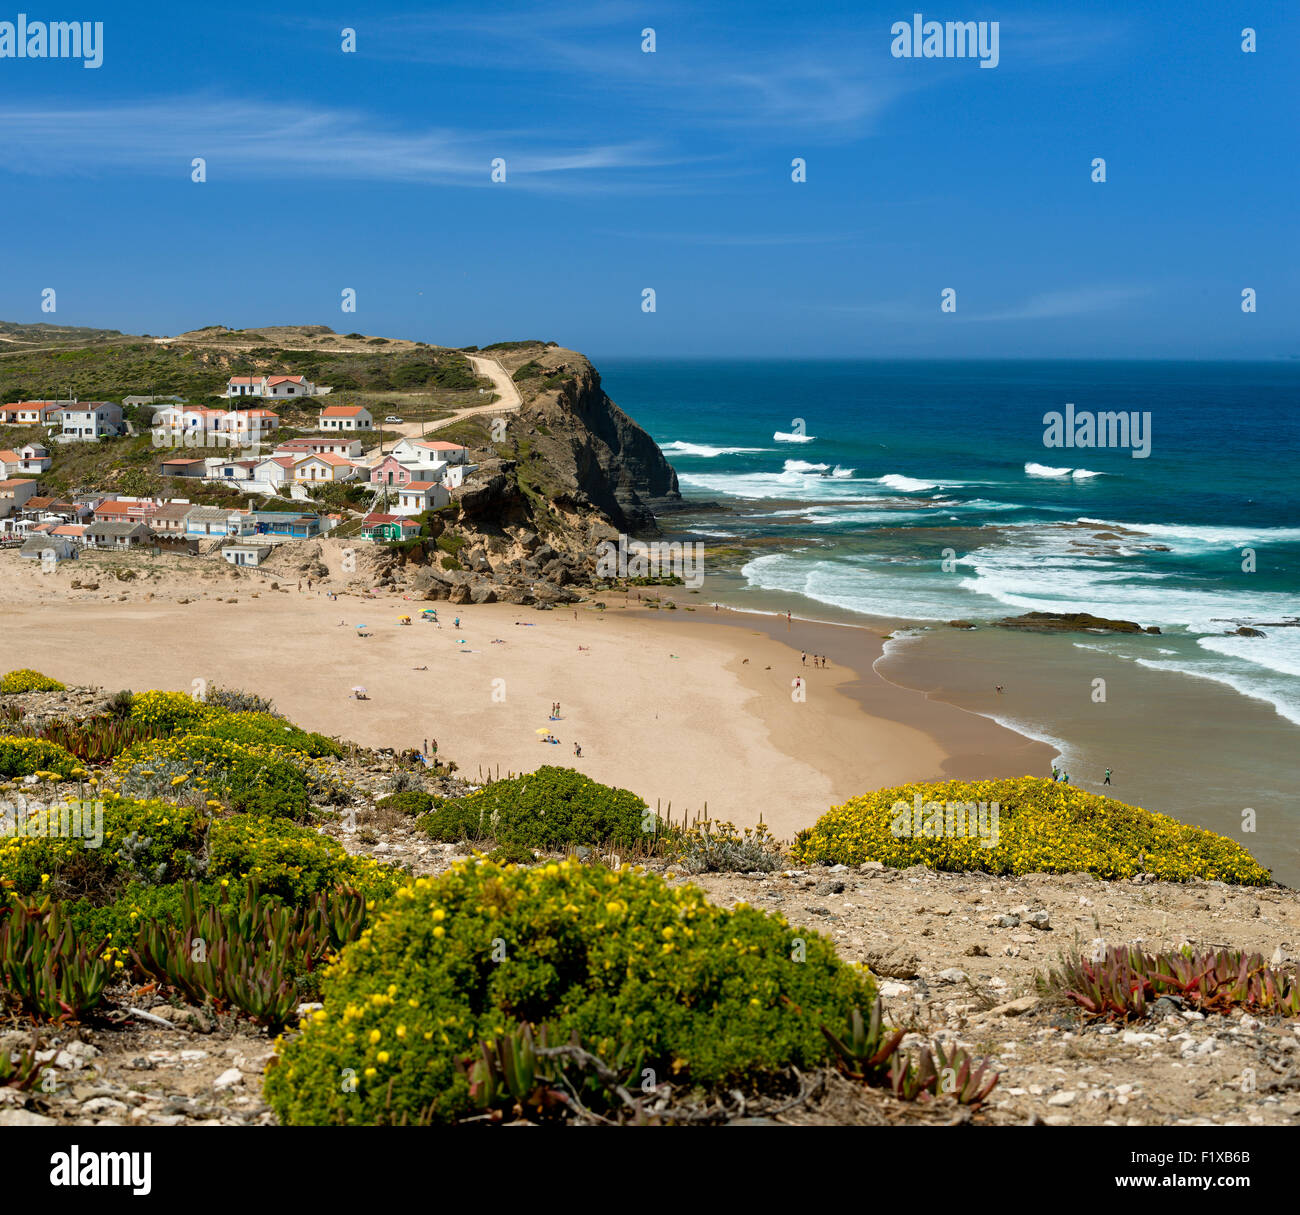 Portugal, the Algarve, the Costa Vicentina, Monte Clérigo village and beach Stock Photo